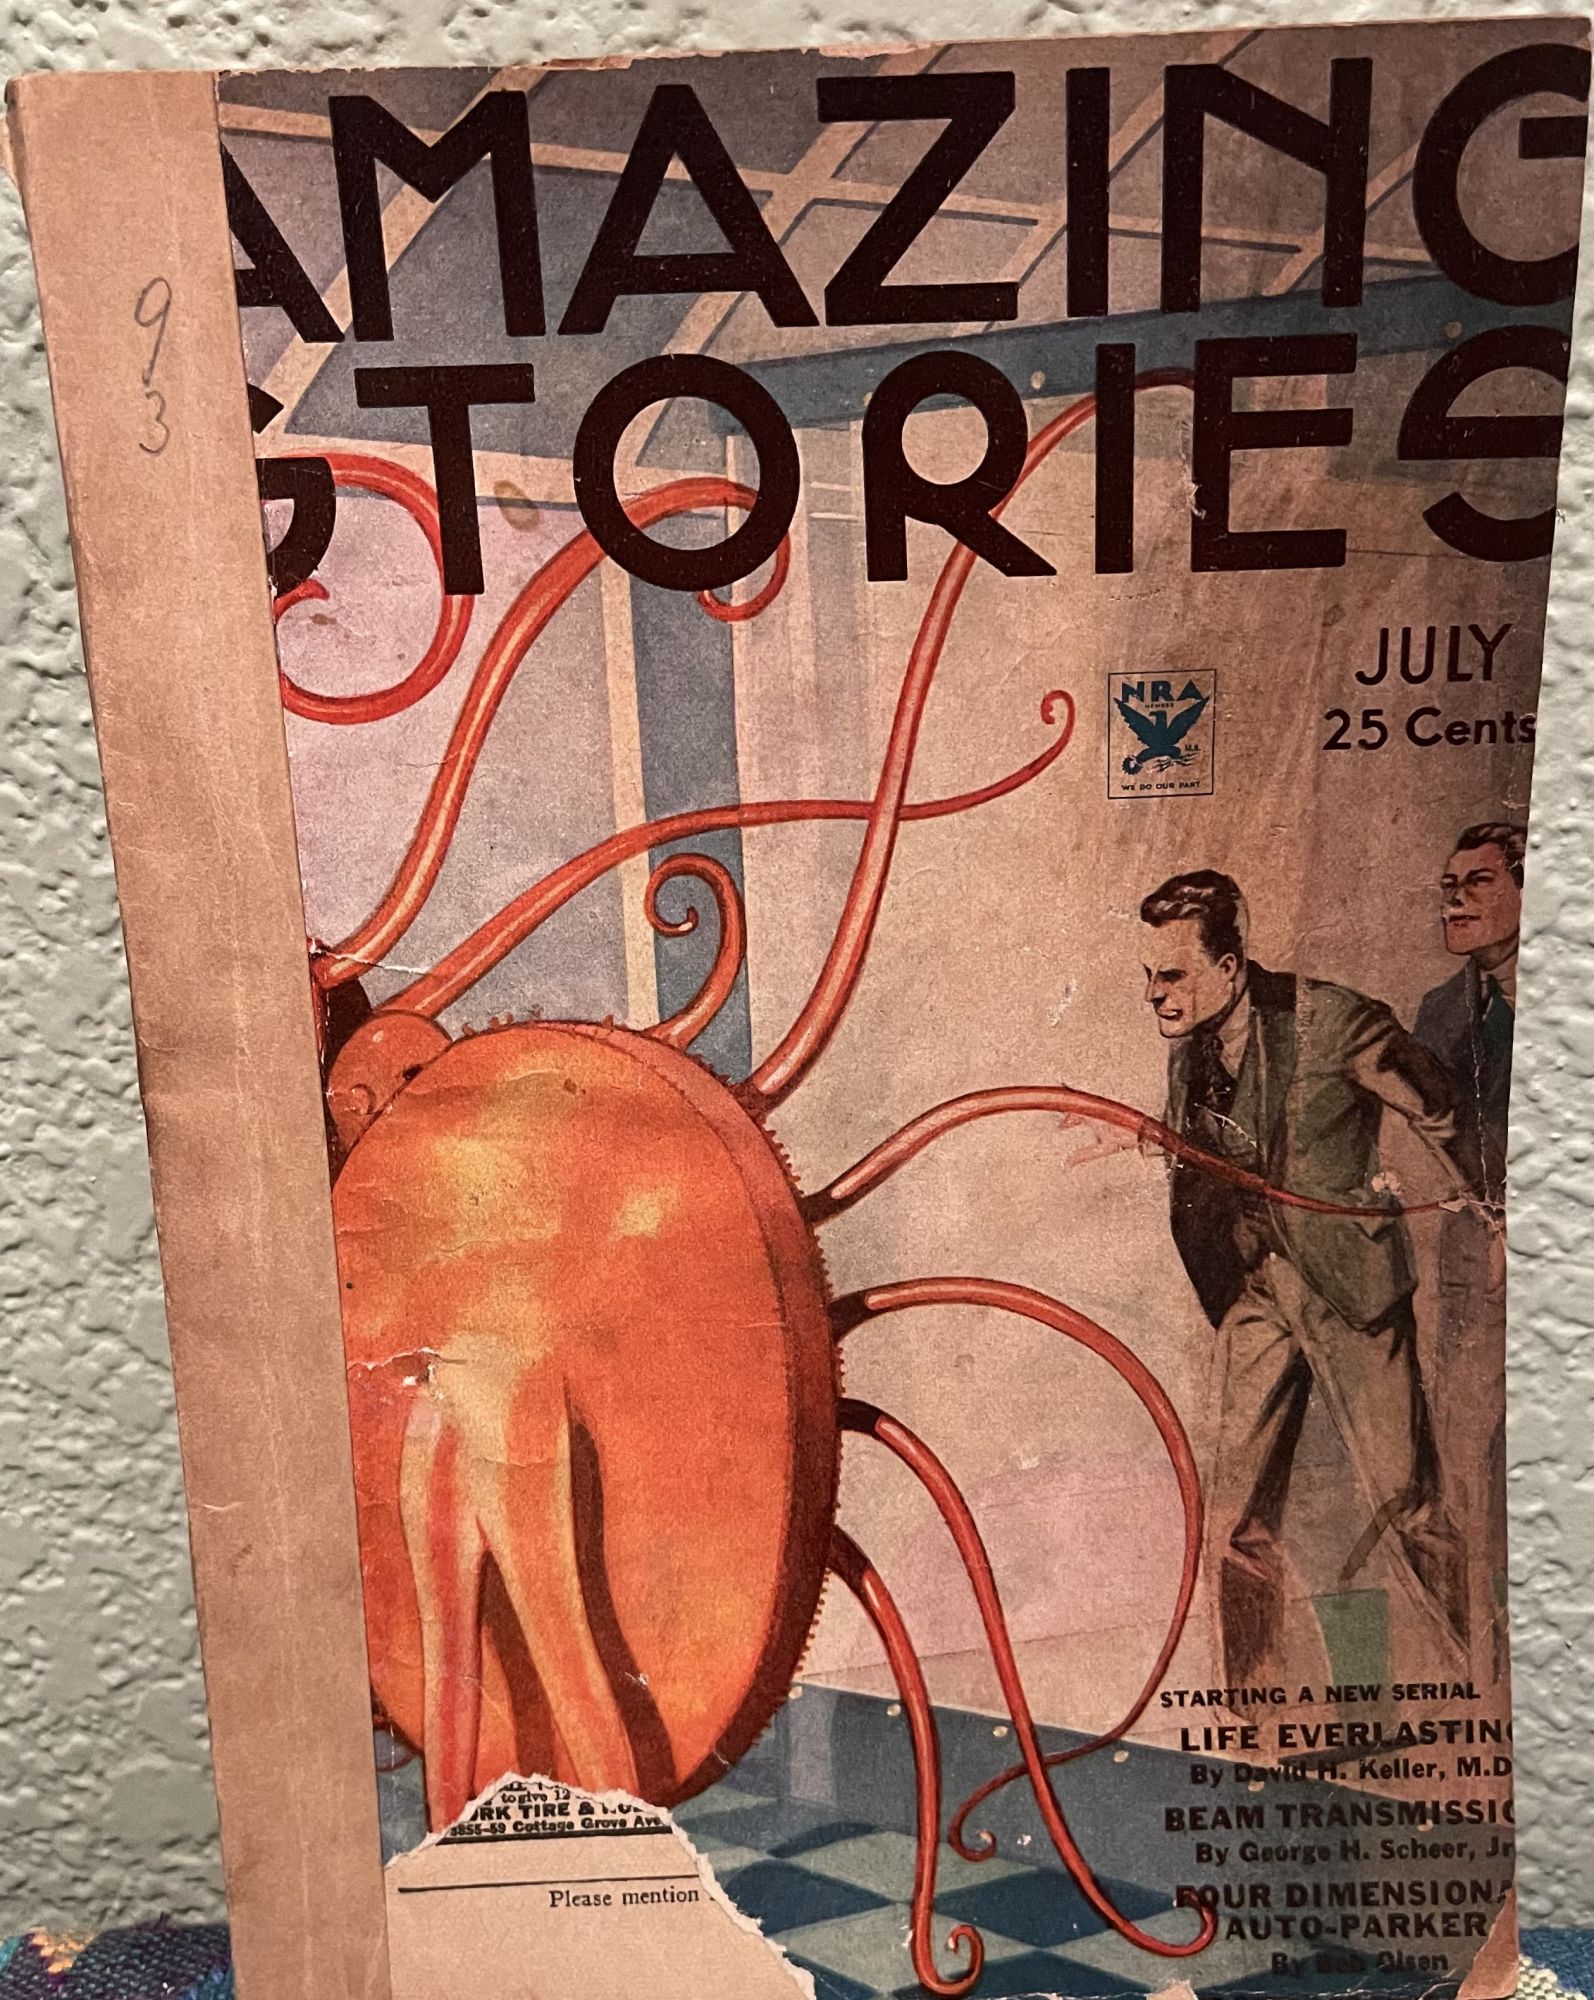 Amazing Stories Science Fiction Vol. 9 No. 3 July 1934. Keller David H. Sloane O'Connor T., Brandt C. A., Mills Charlie, Olsen Bob, Scheer George H., Verne Jules, Peril Milton R.